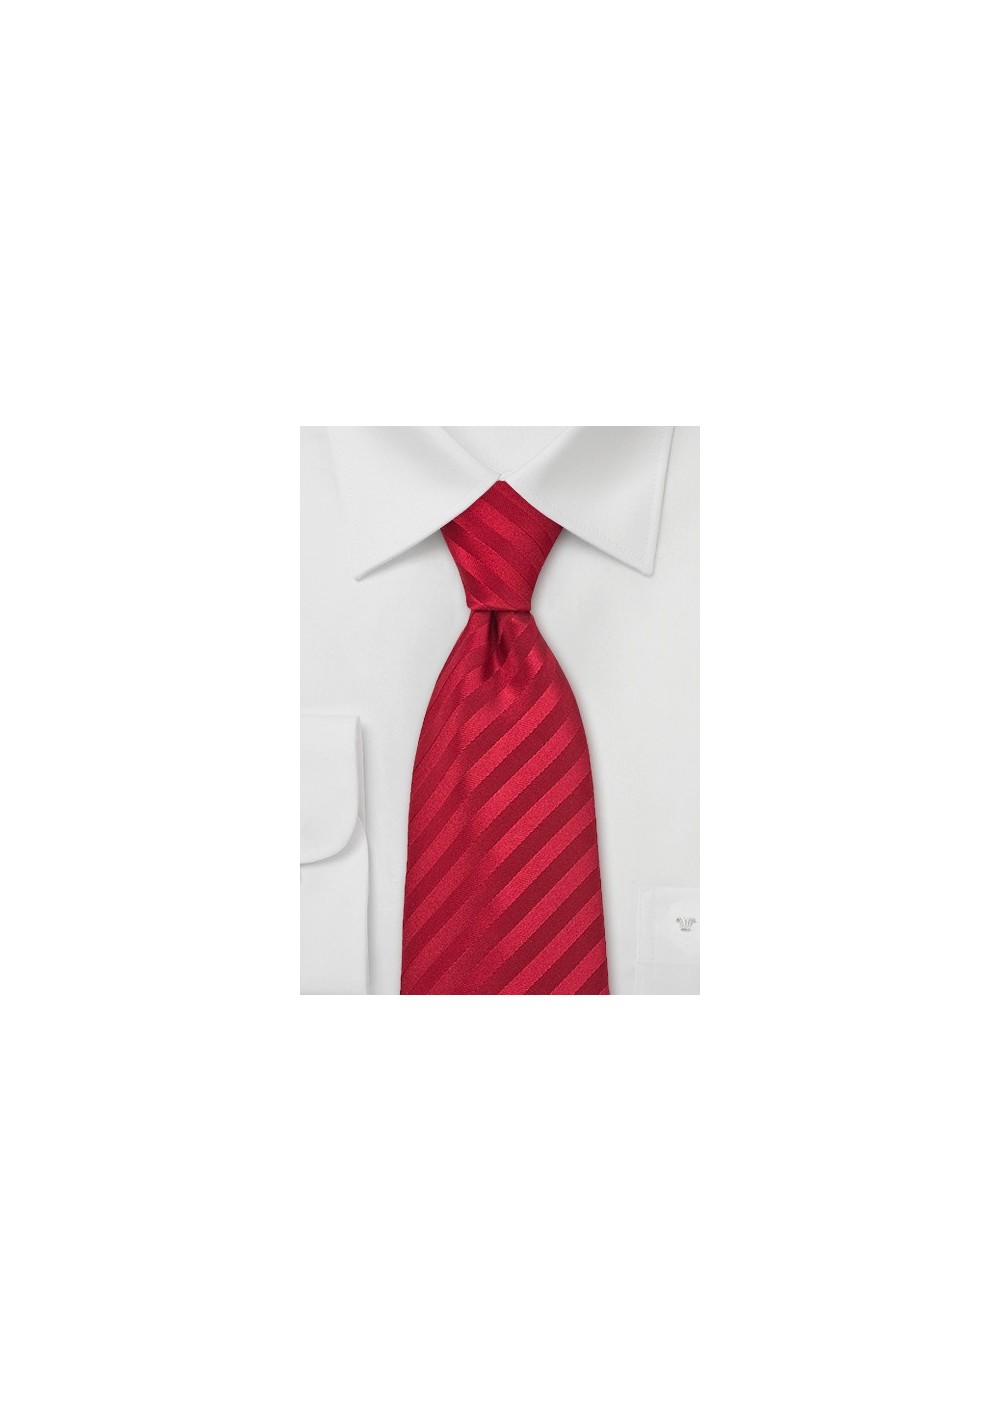 Bright Ruby Red Silk Tie